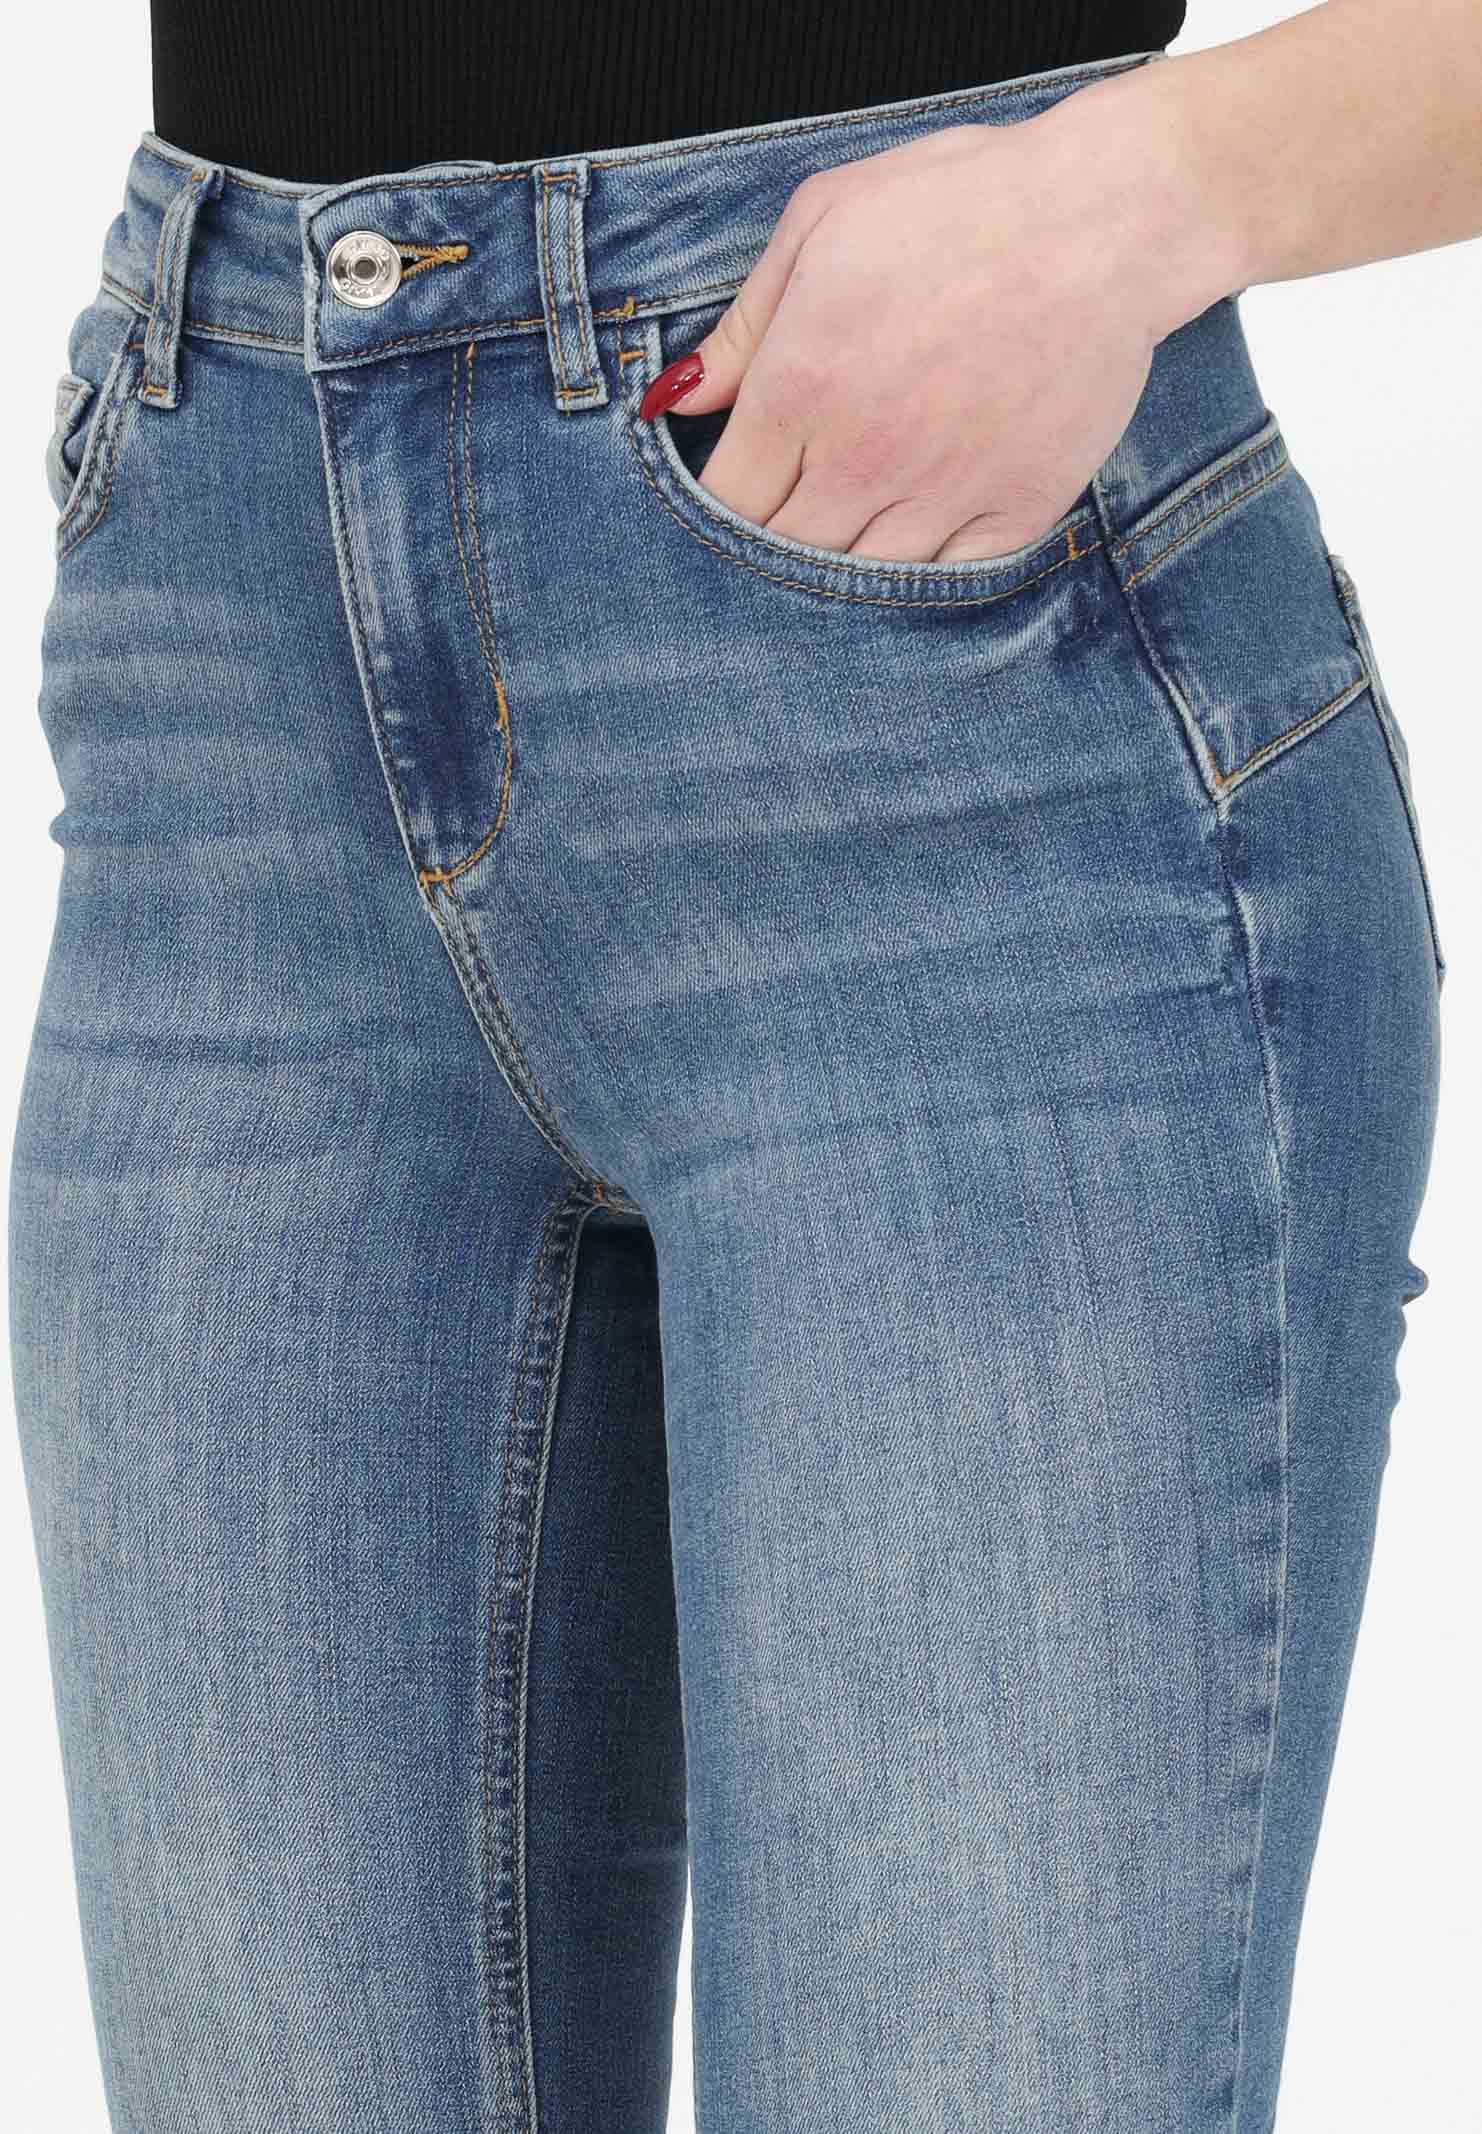 Misionero Bebida Mutuo Women's Denim Bottom Up Skinny Jeans - LIU JO - Pavidas